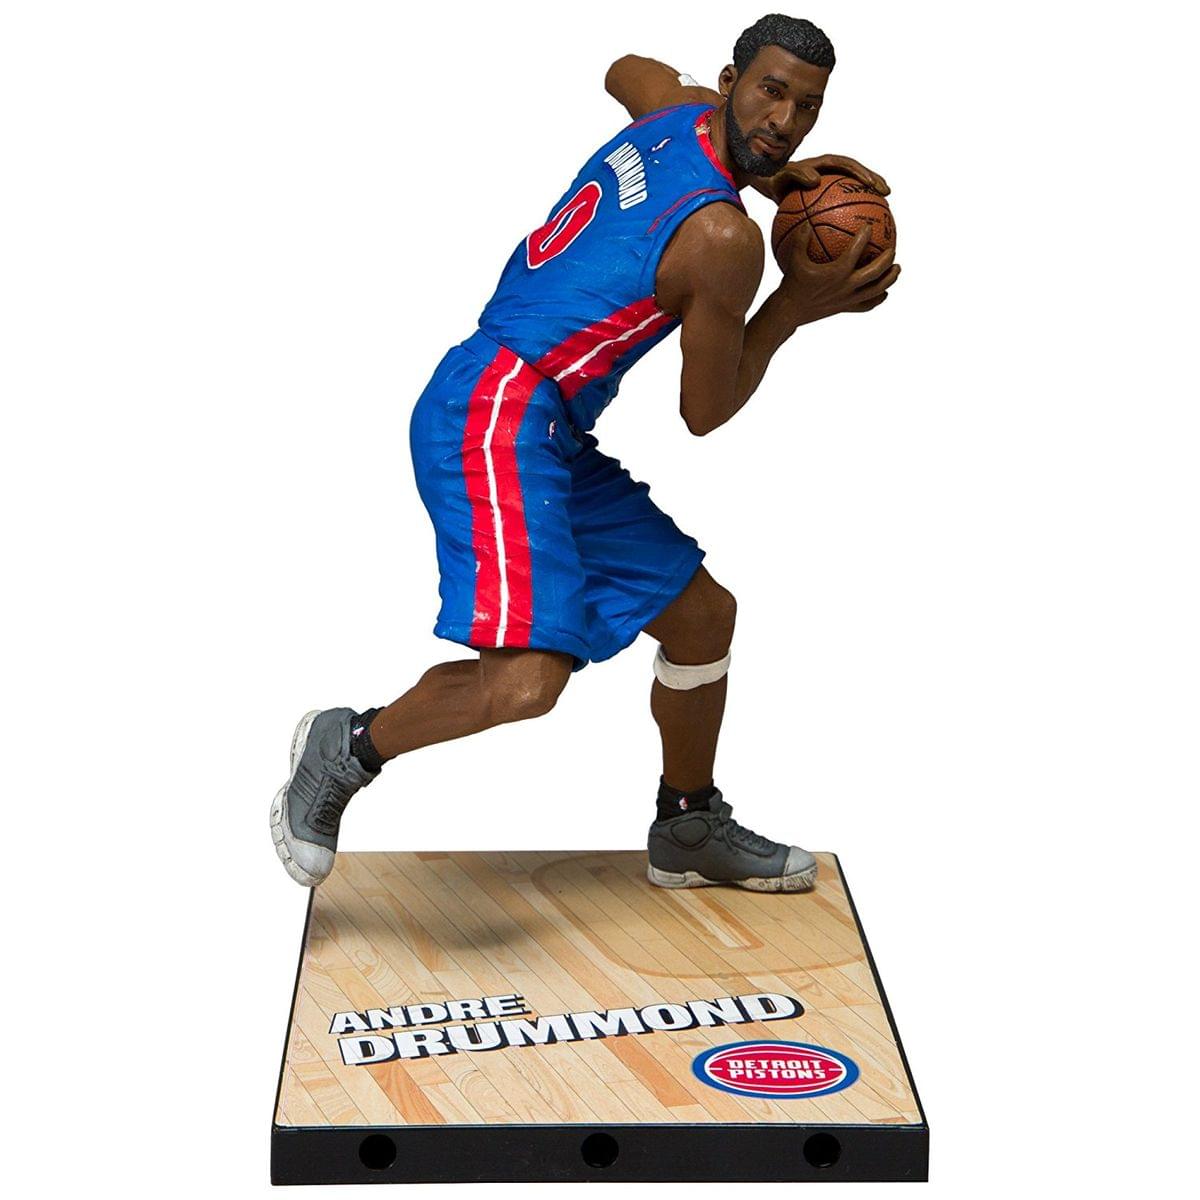 Mcfarlane NBA Series 31 Detroit Pistons Action Figure: Andre Drummond